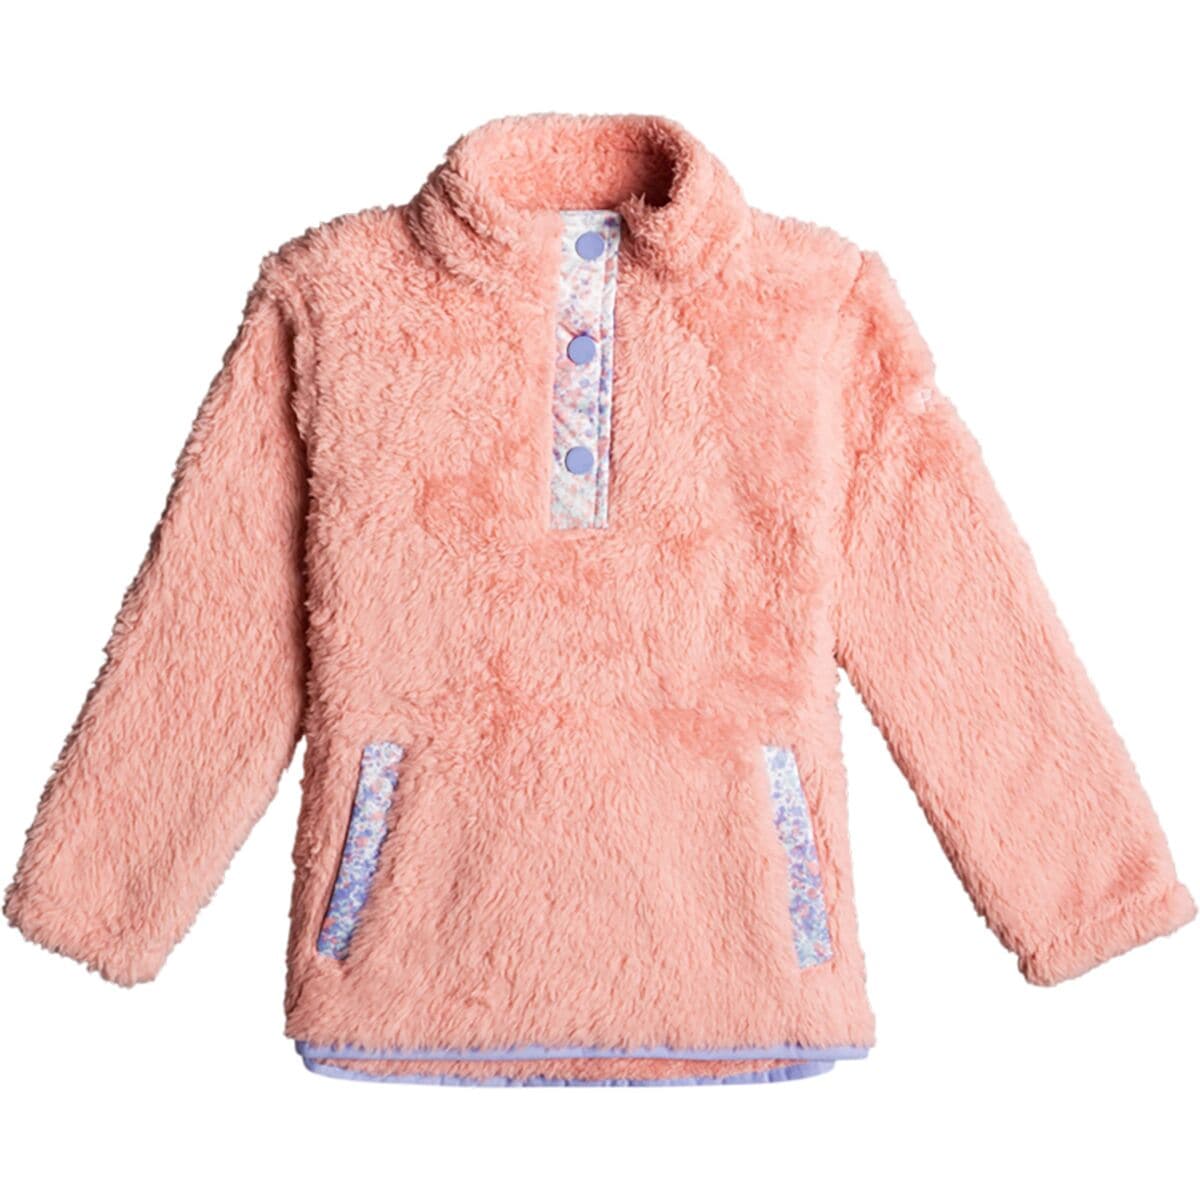 Roxy Mini Alabama Fleece Top - Toddler Girls'